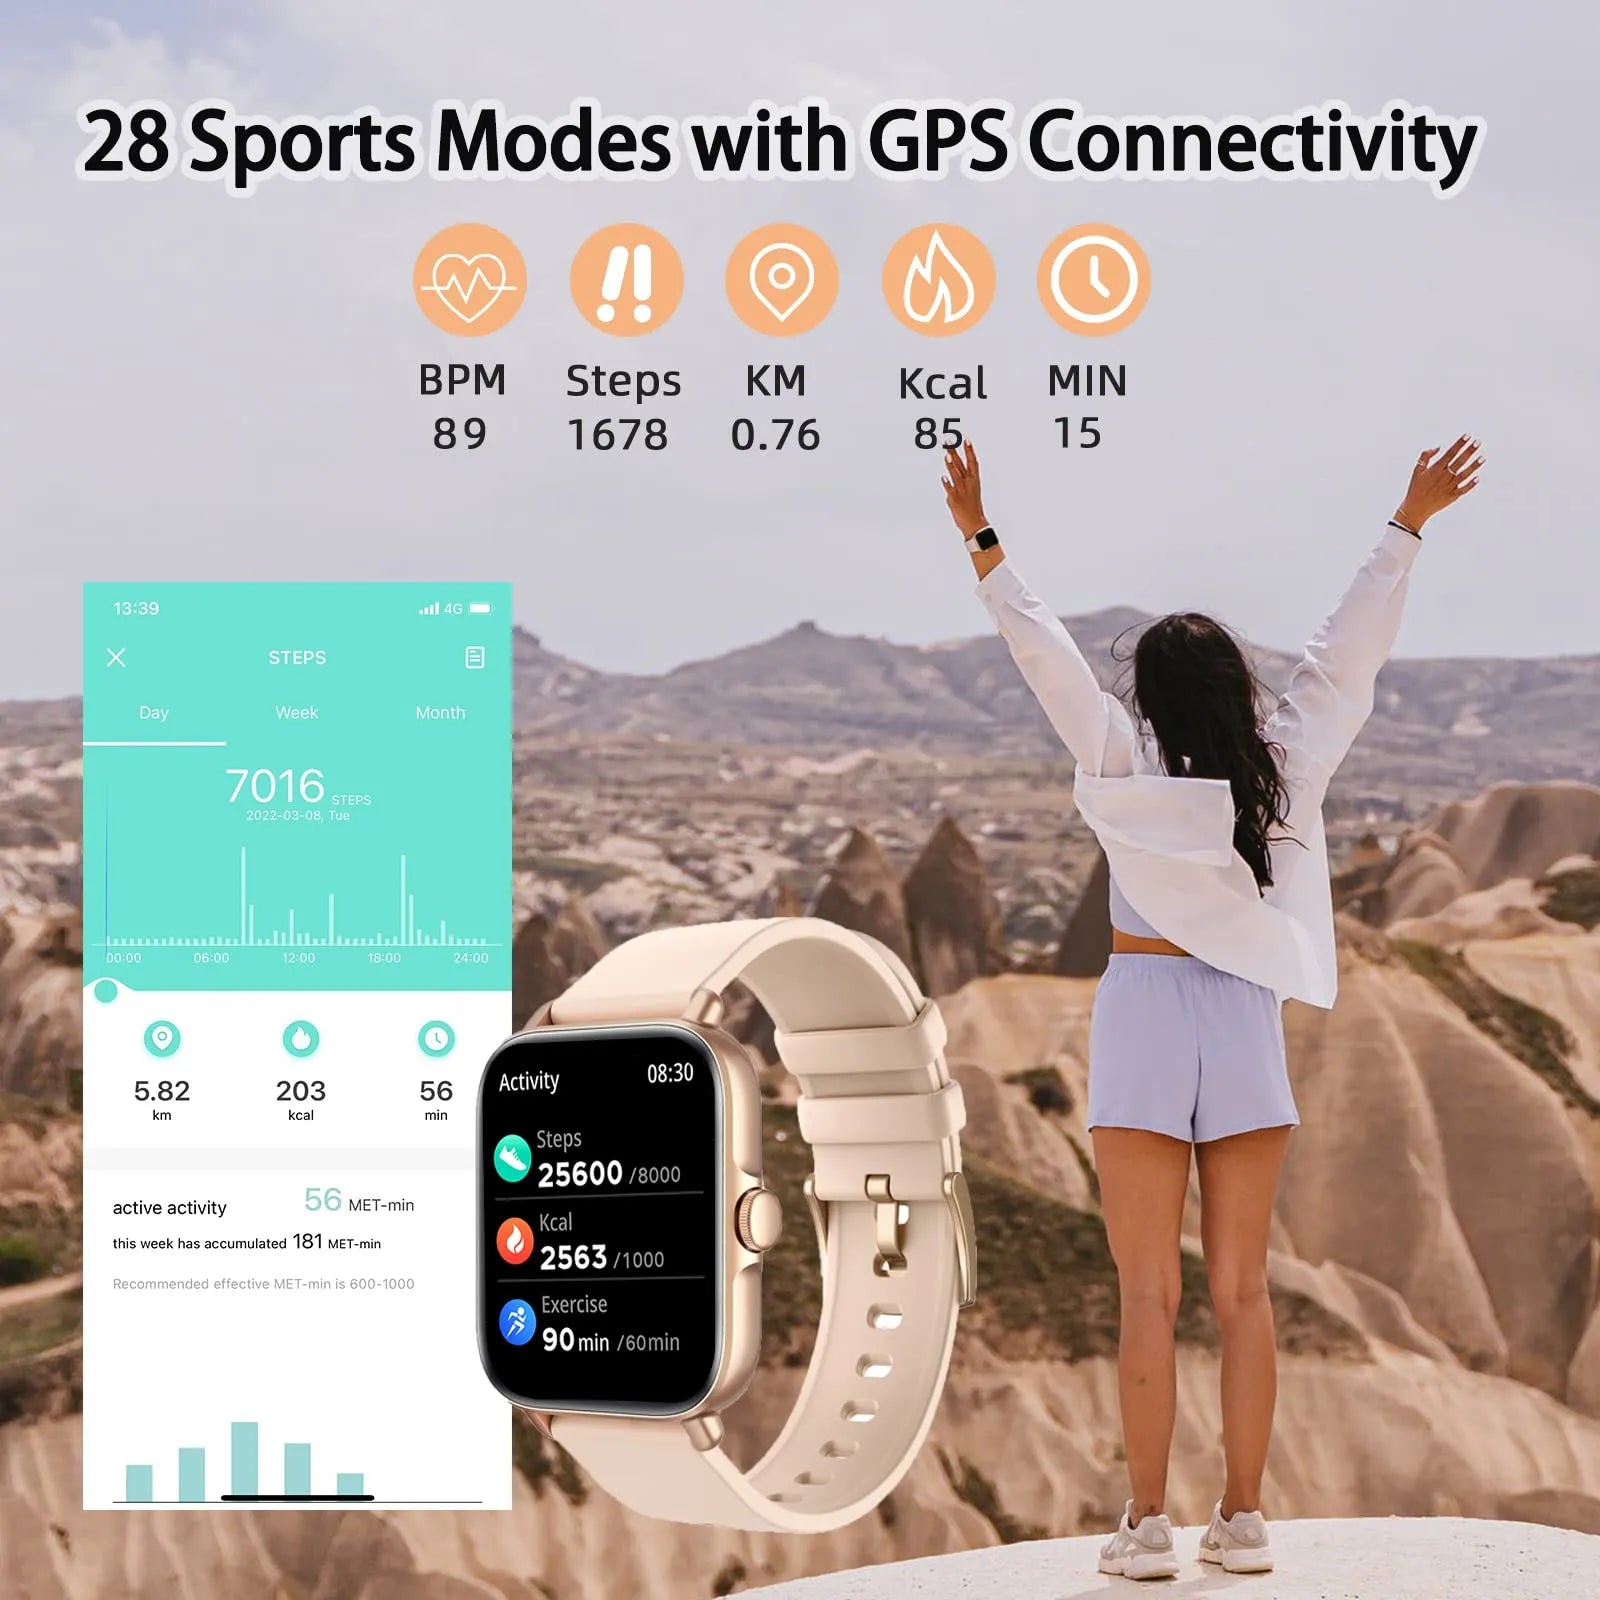 Lenovo New Women Ladies Smart Watch Heart Rate Sleep Blood Oxygen Fitness Tracker Bracelet for Android  iOS Men Sport Watch 2023